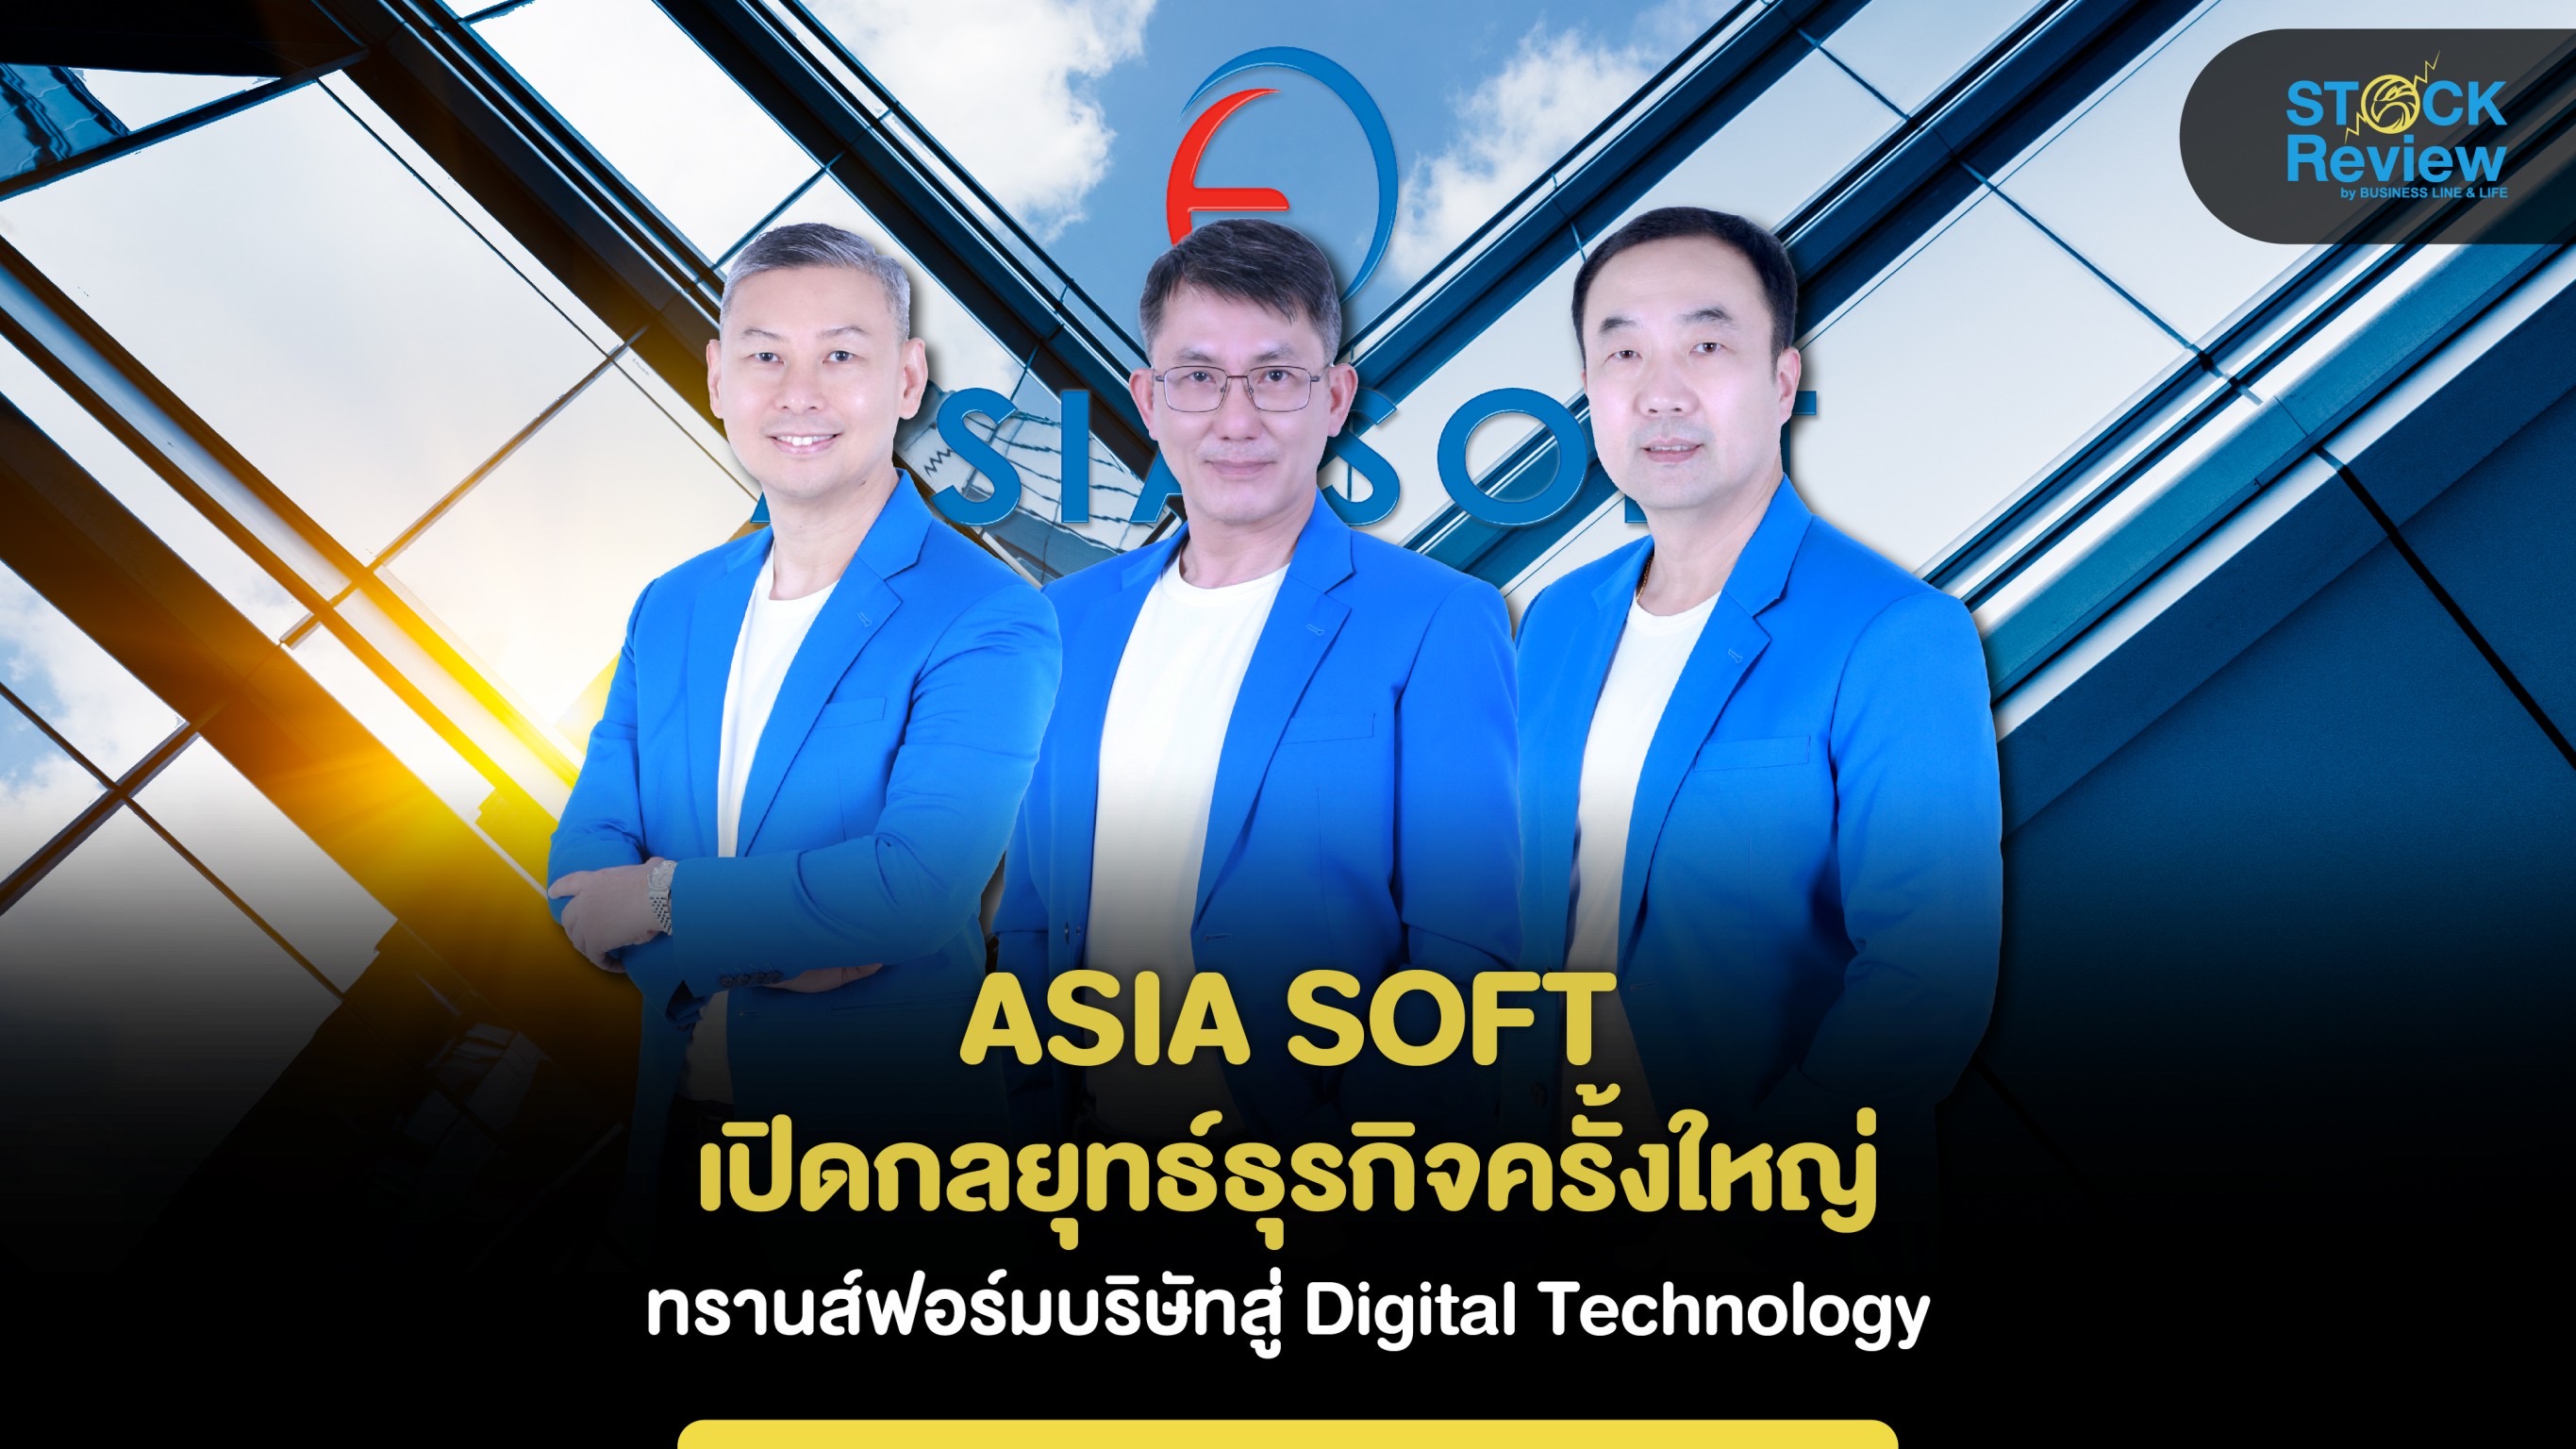 ASIA SOFT เปิดกลยุทธ์ธุรกิจครั้งใหญ่ ทรานส์ฟอร์มบริษัทสู่ Digital Technology